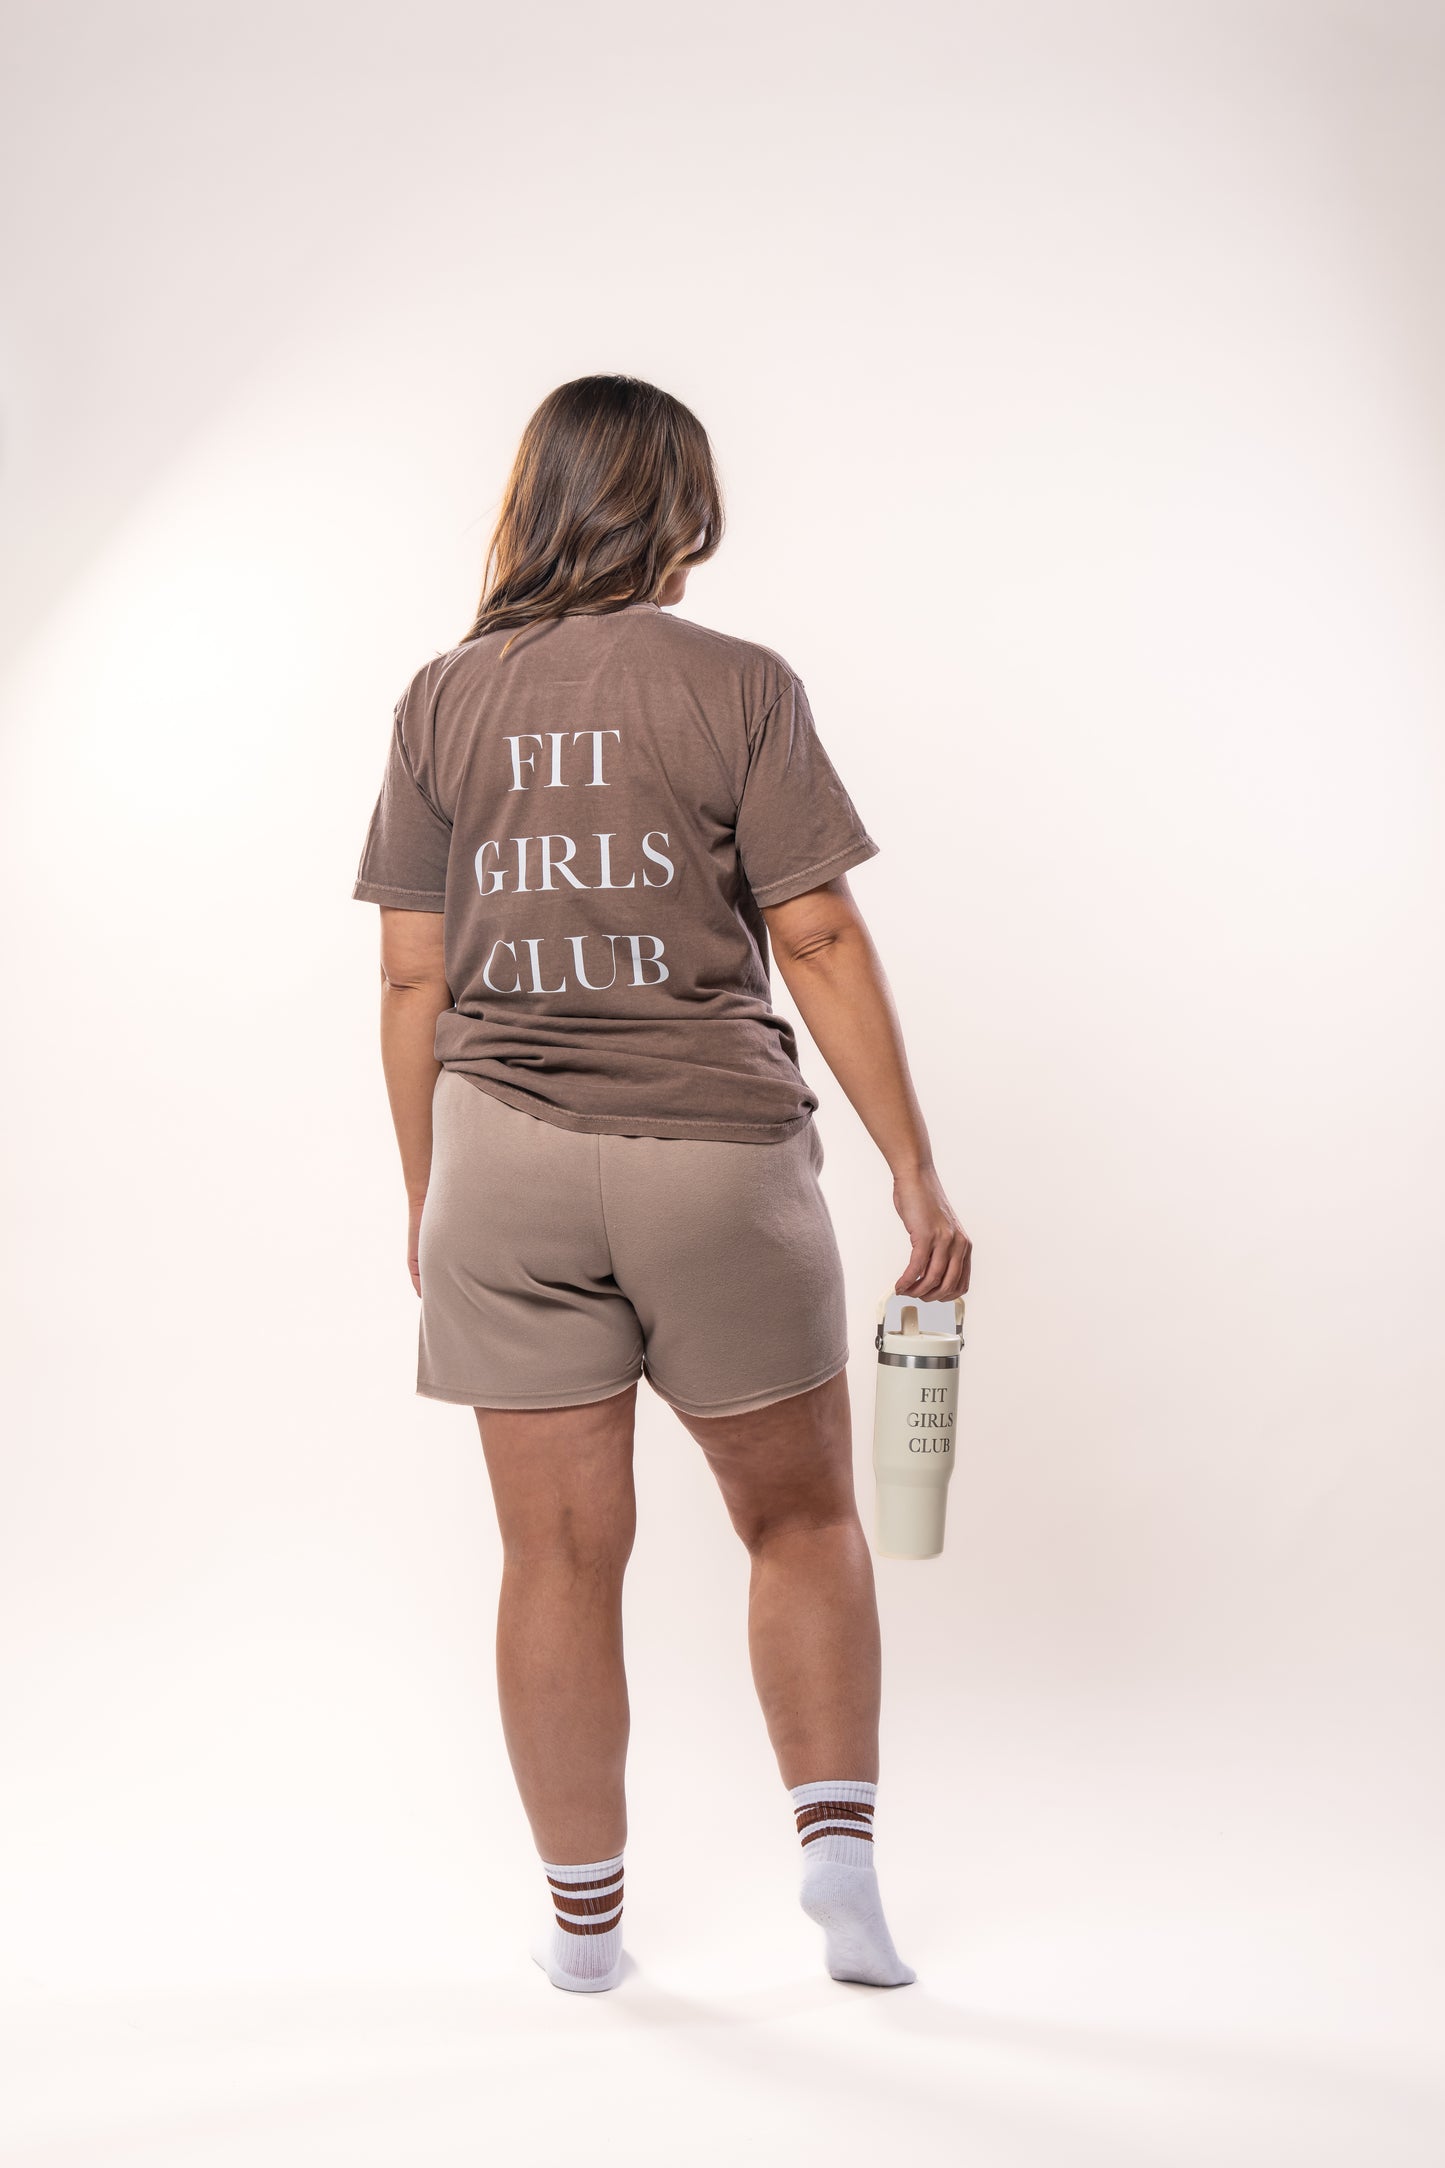 Fit Girls Club - 30oz Flip Straw Tumbler (Ivory)